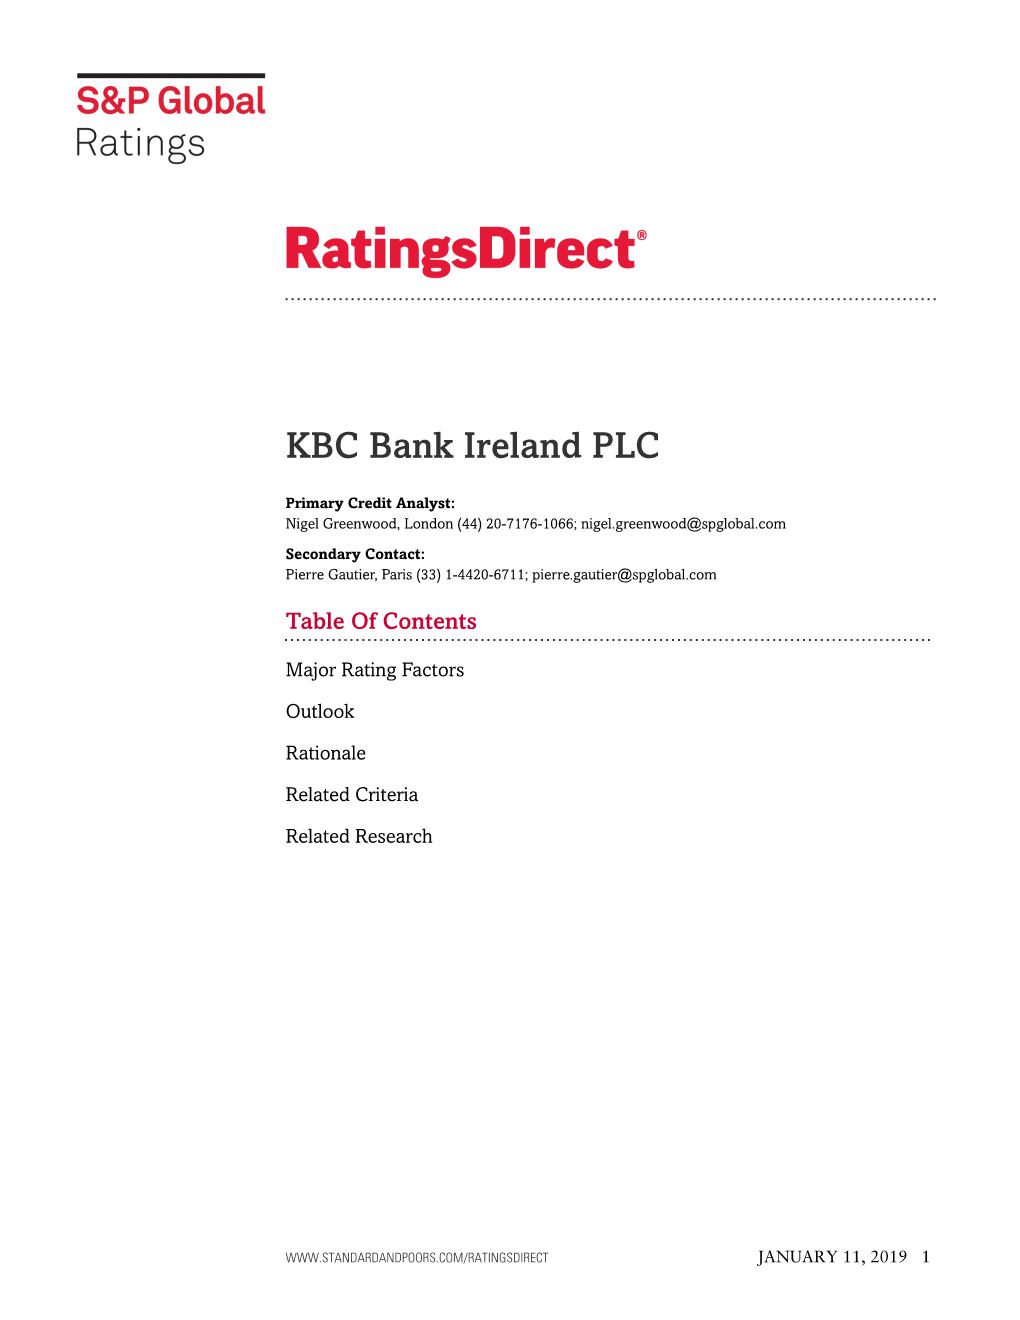 Standard and Poors Rating Report (KBC Bank Ireland)